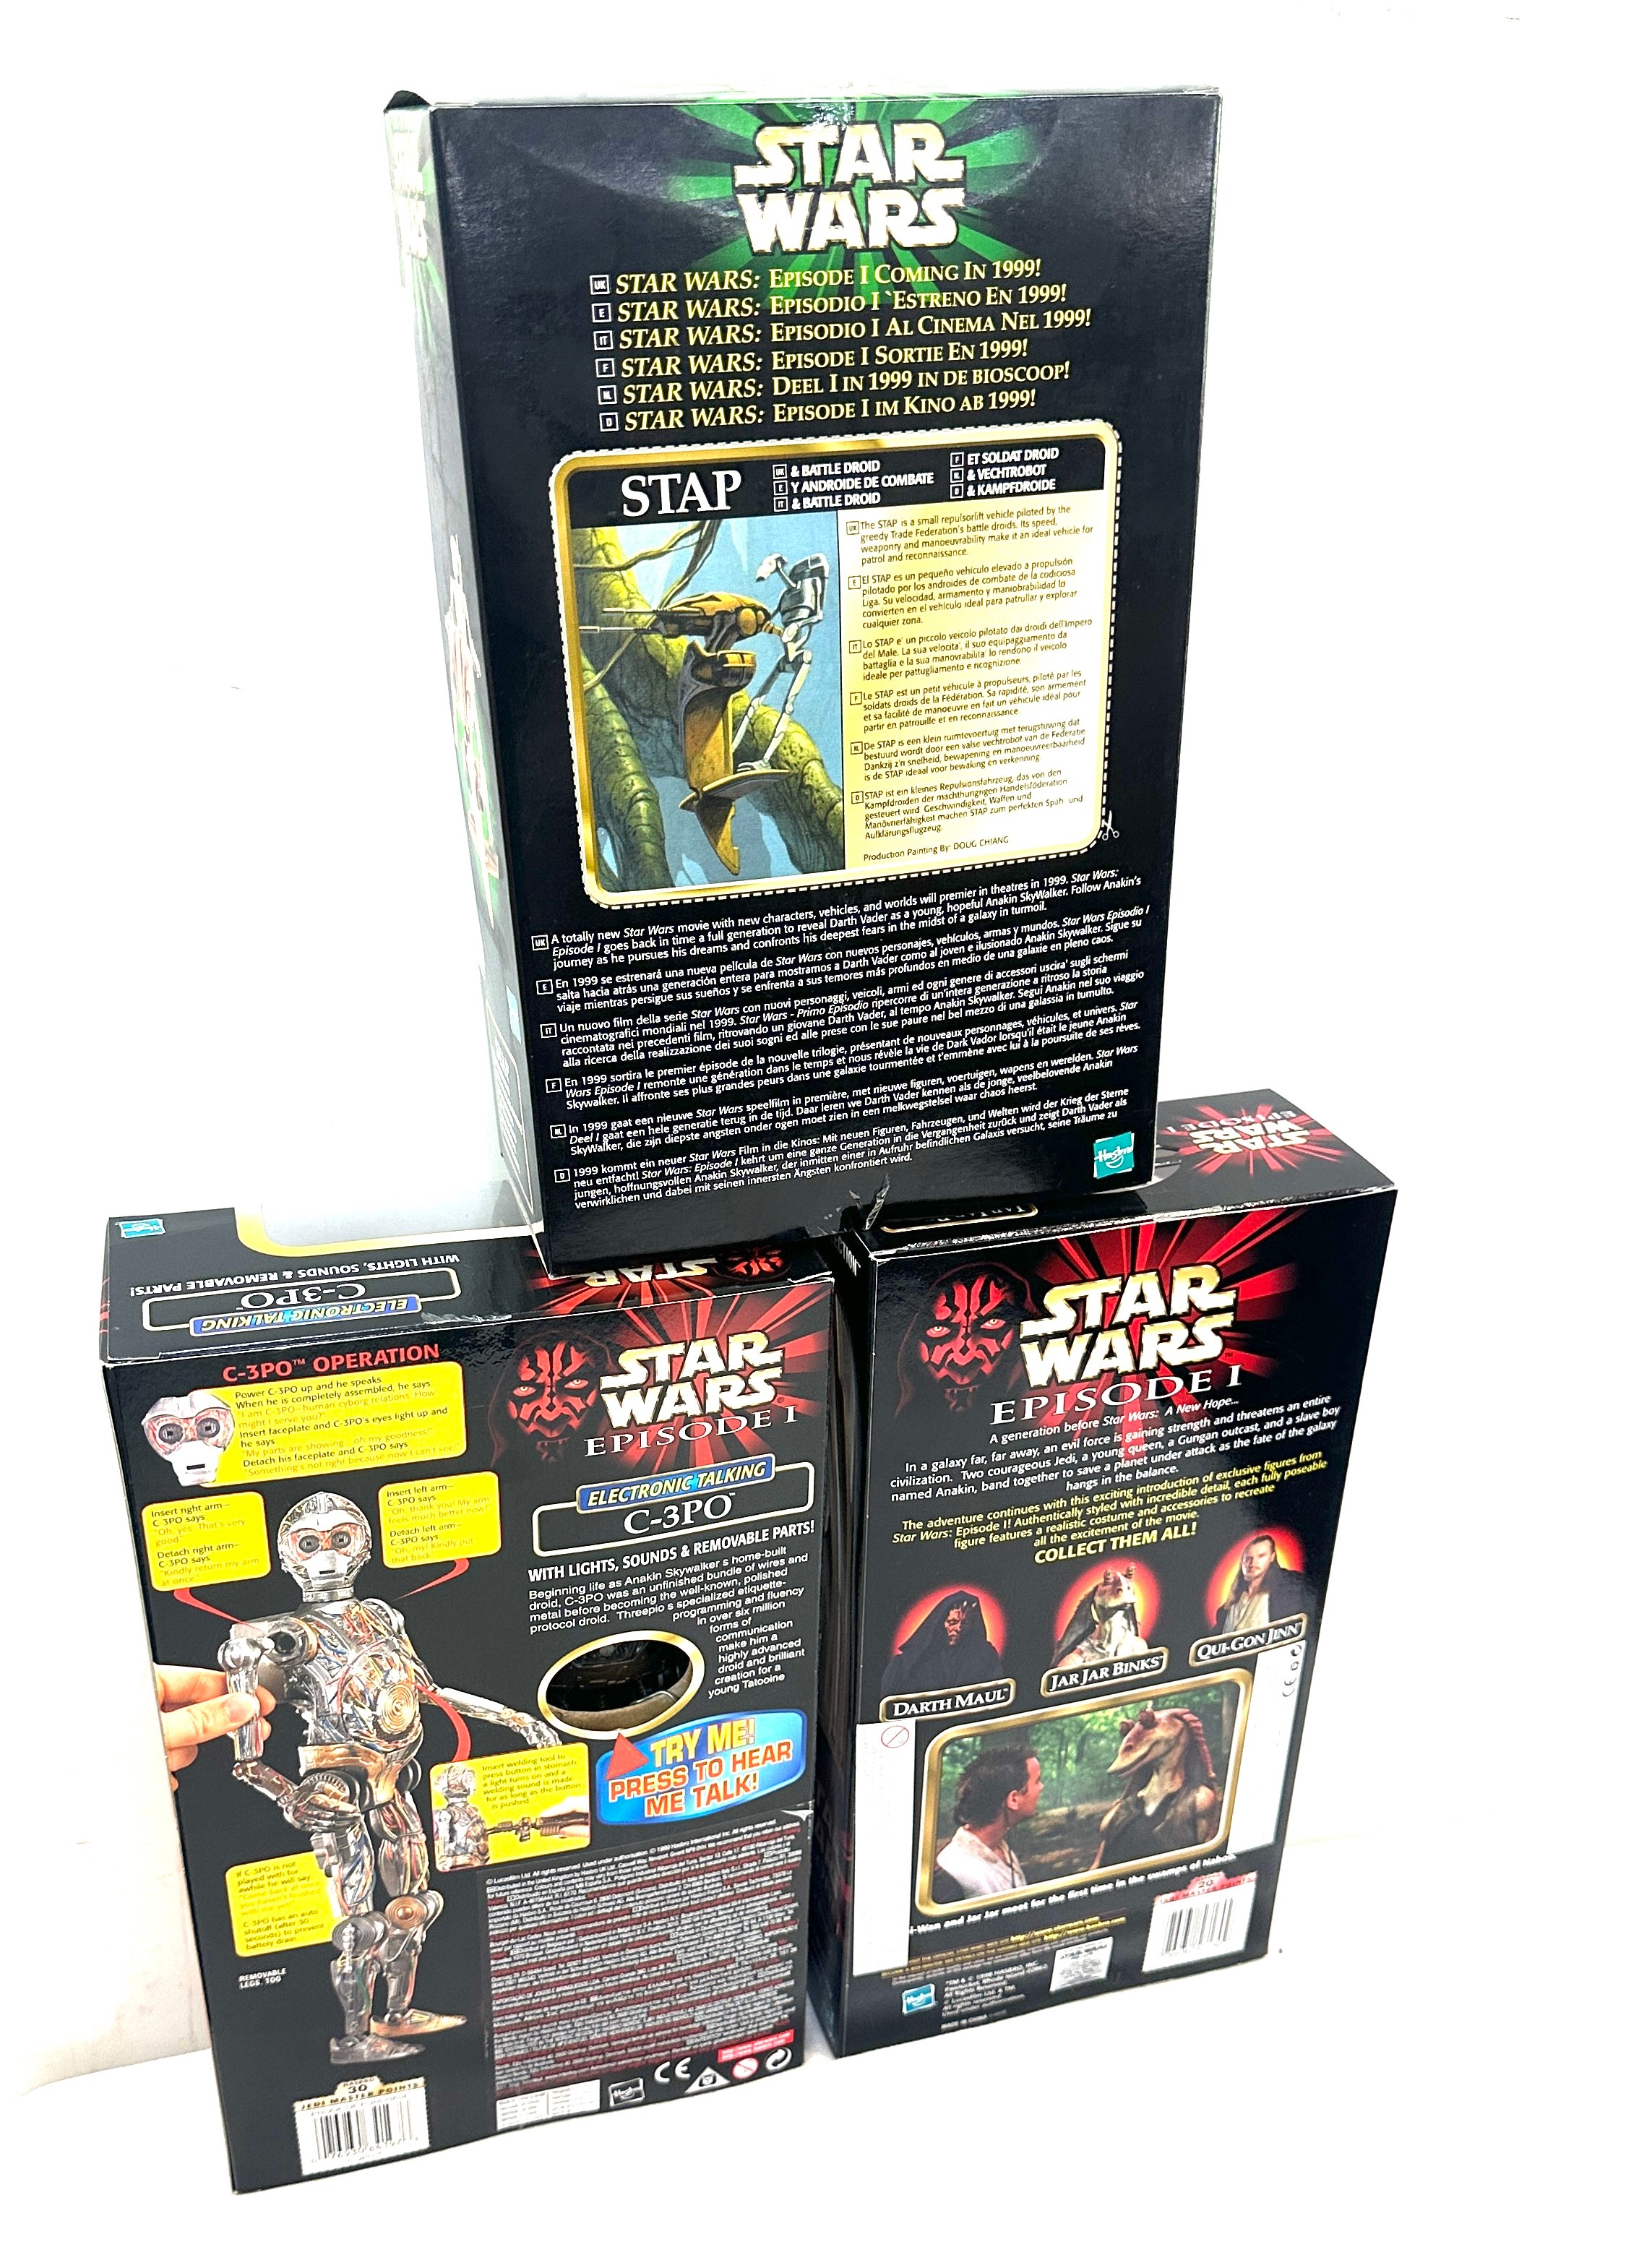 Star Wars Stao, Star Wars Episode I C-3PO, Jar Jar Binks, all 3 in original packaging - Image 5 of 5